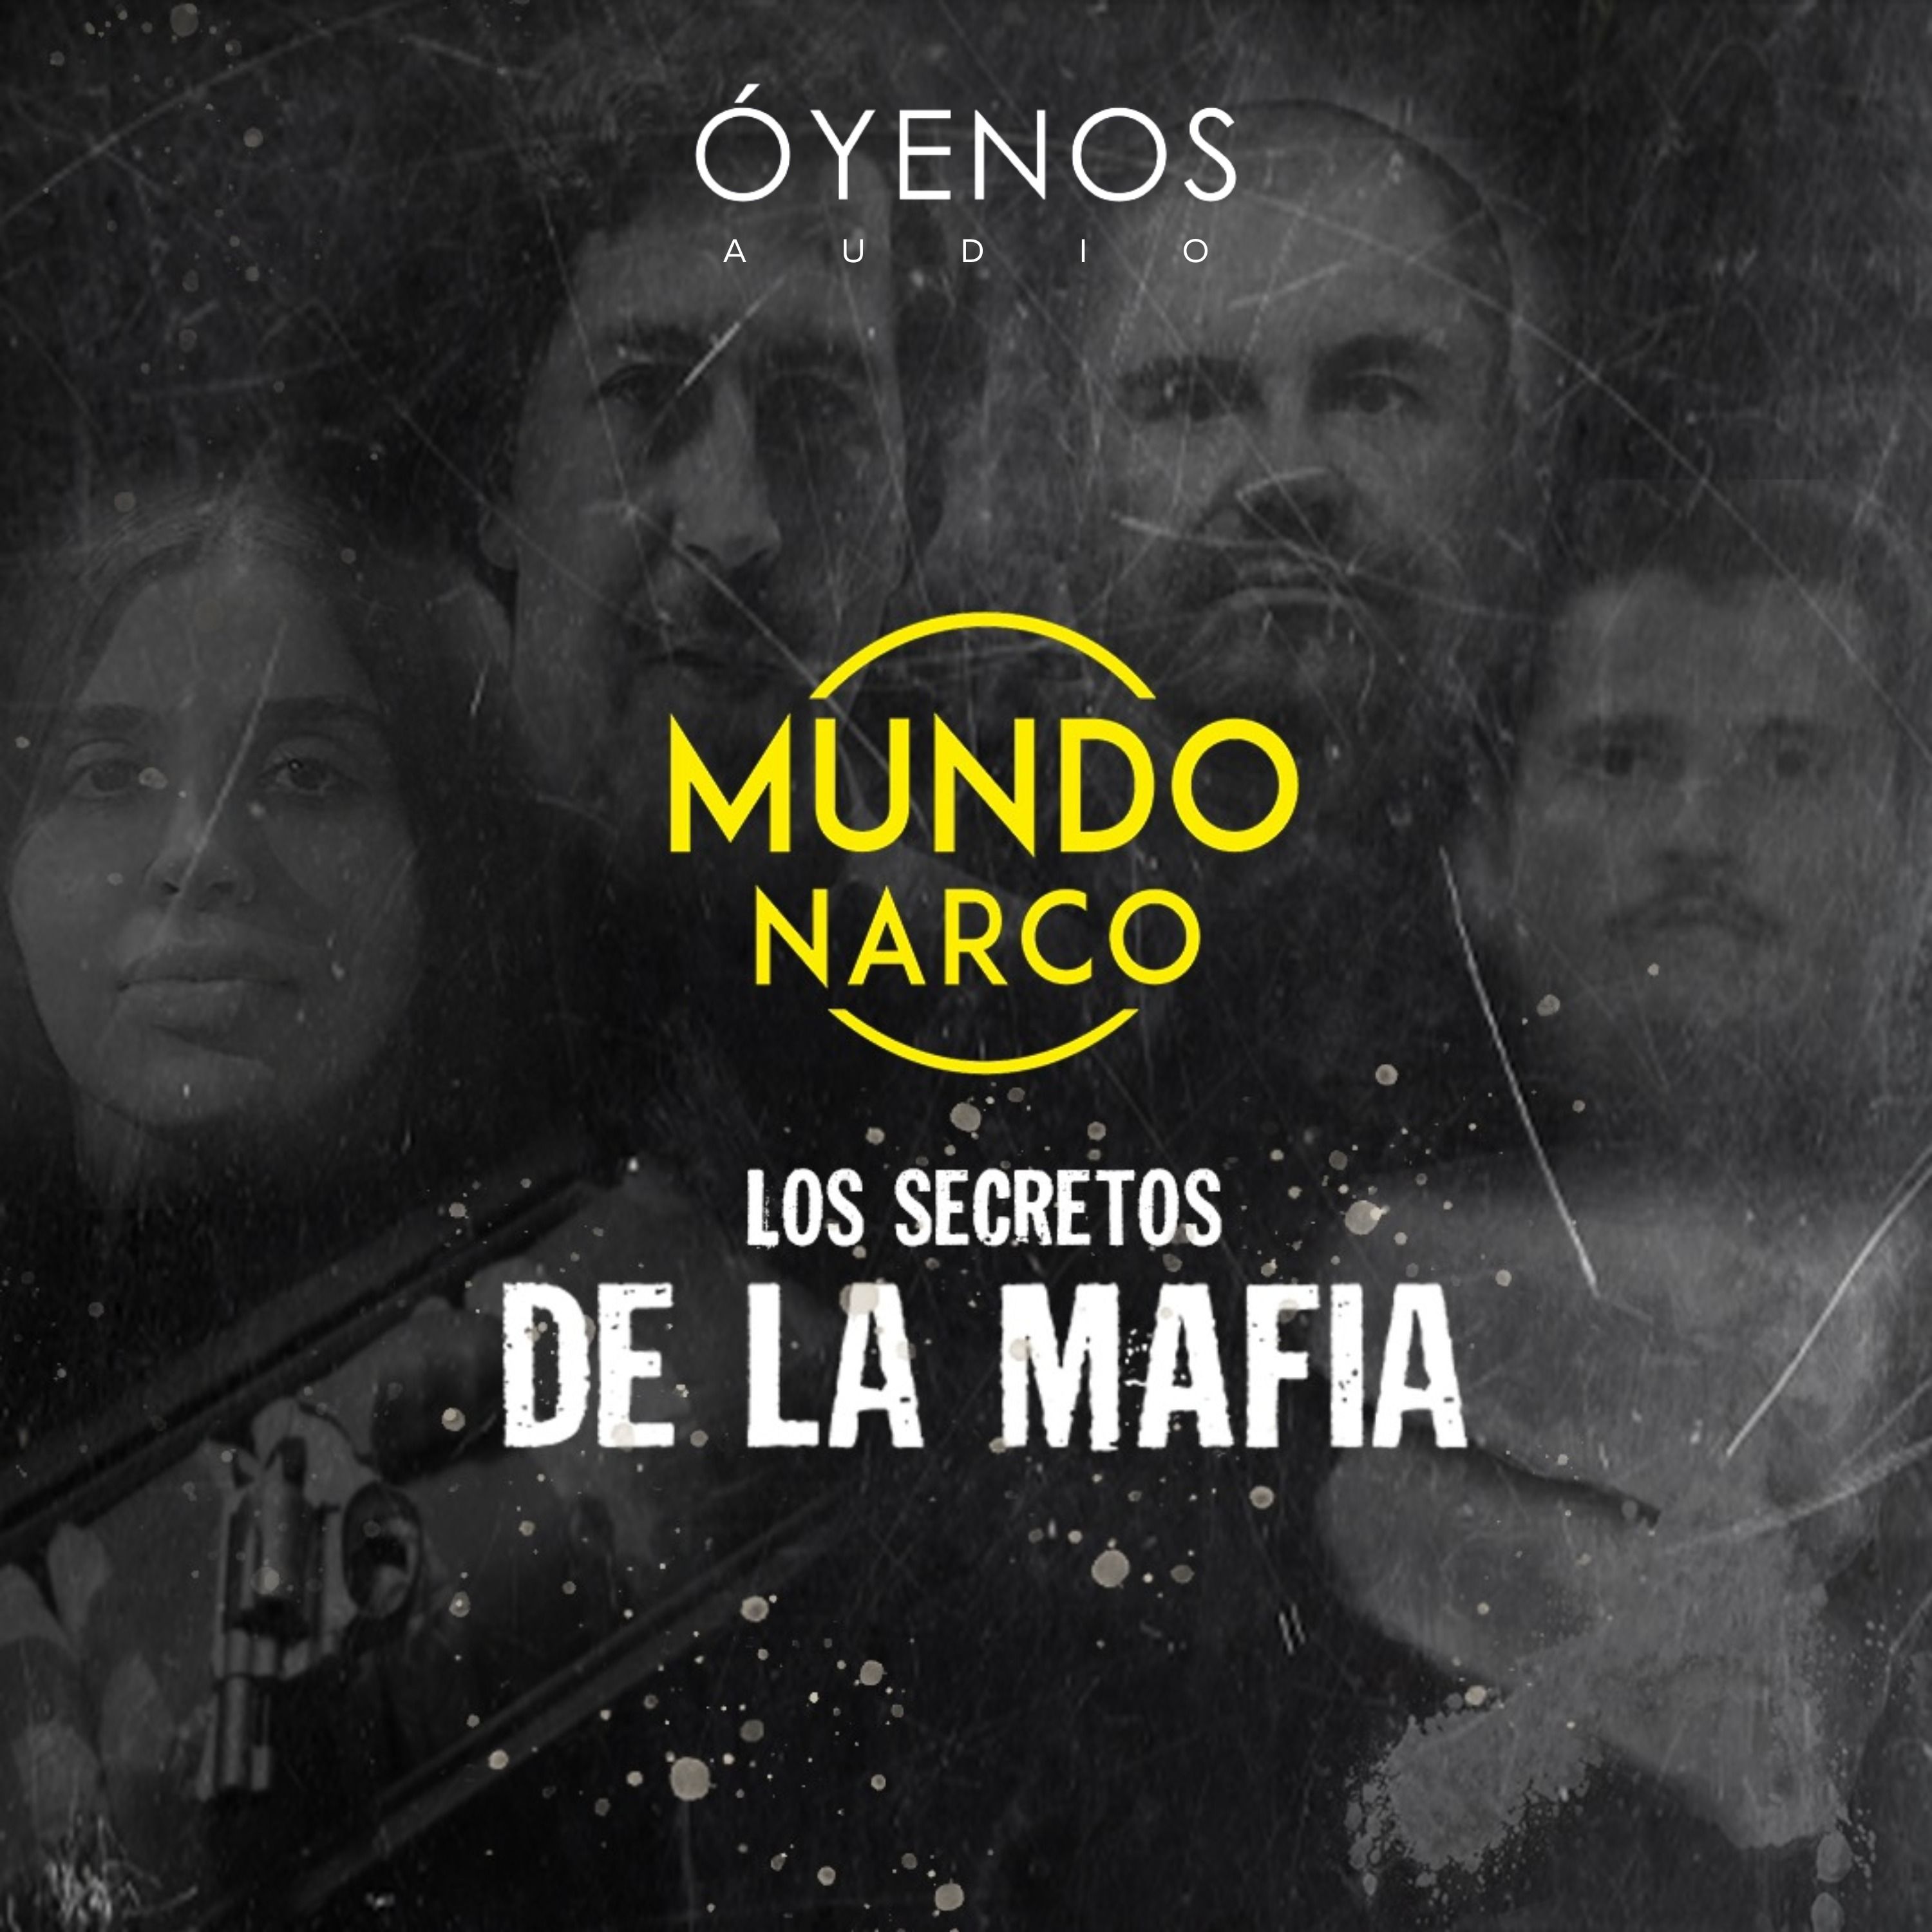 david tyree recommends Expo Magazine Mundo Narco